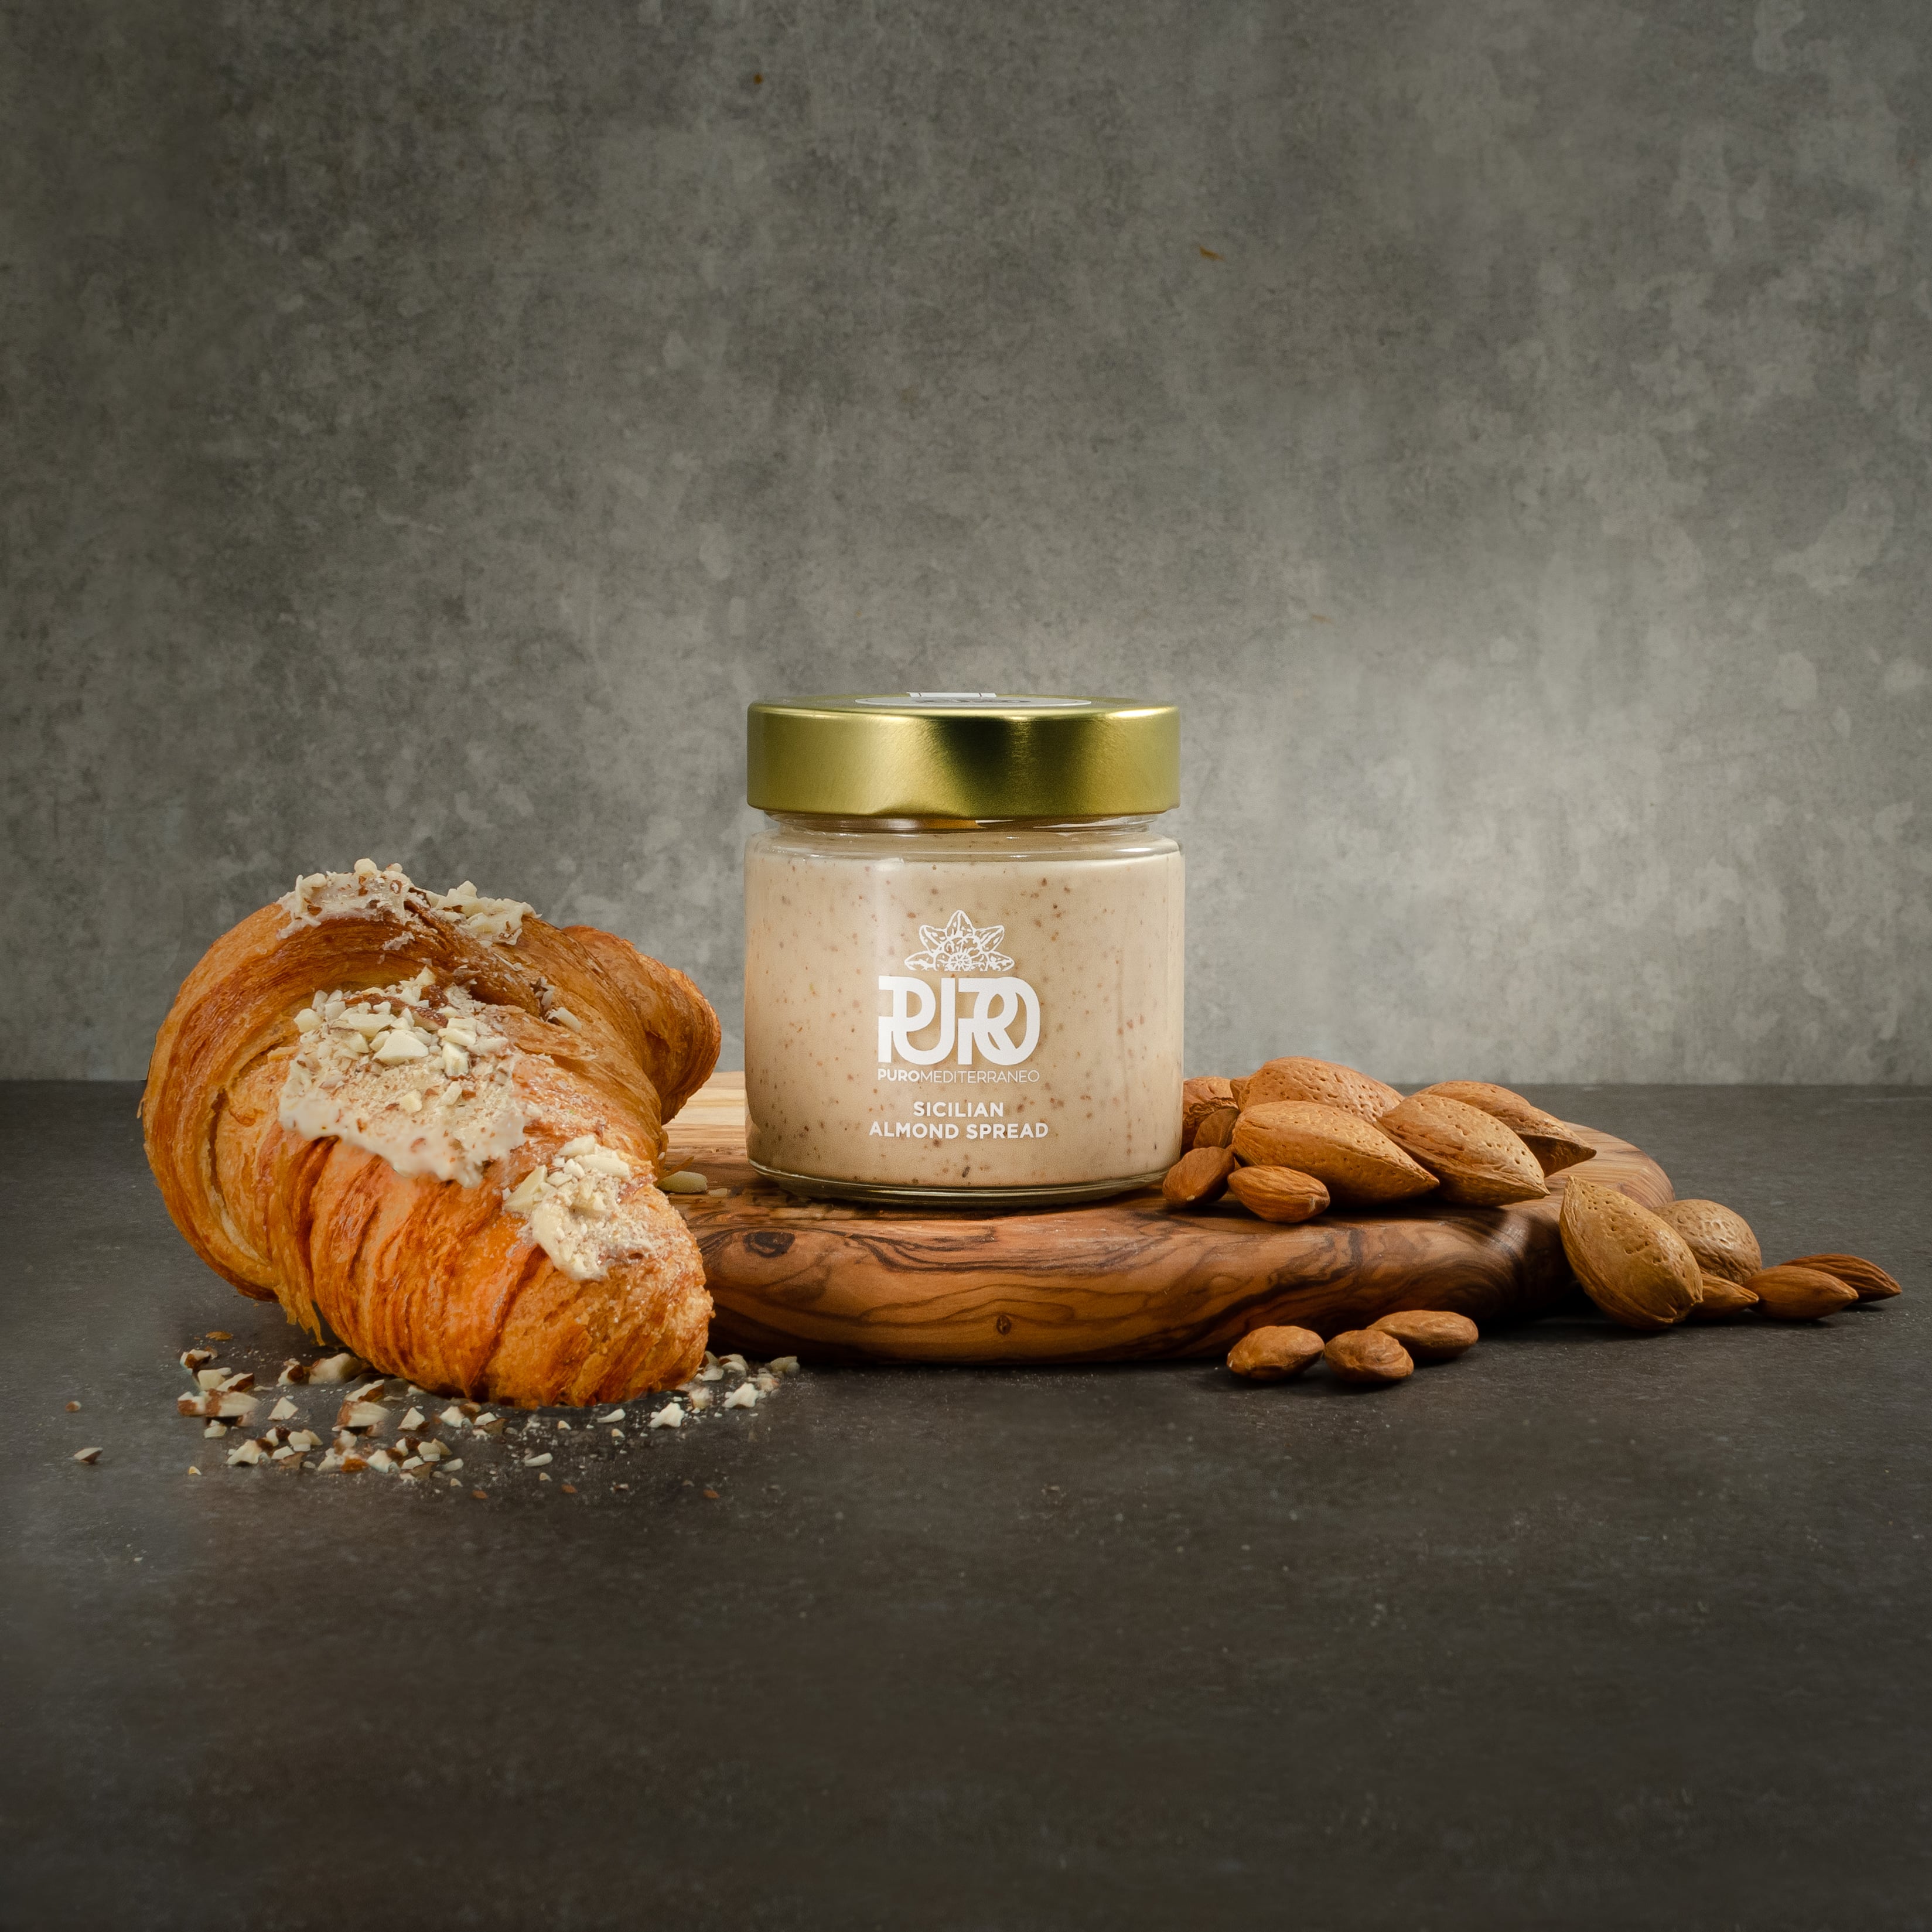 Puro Med Sicilian Almond Spread